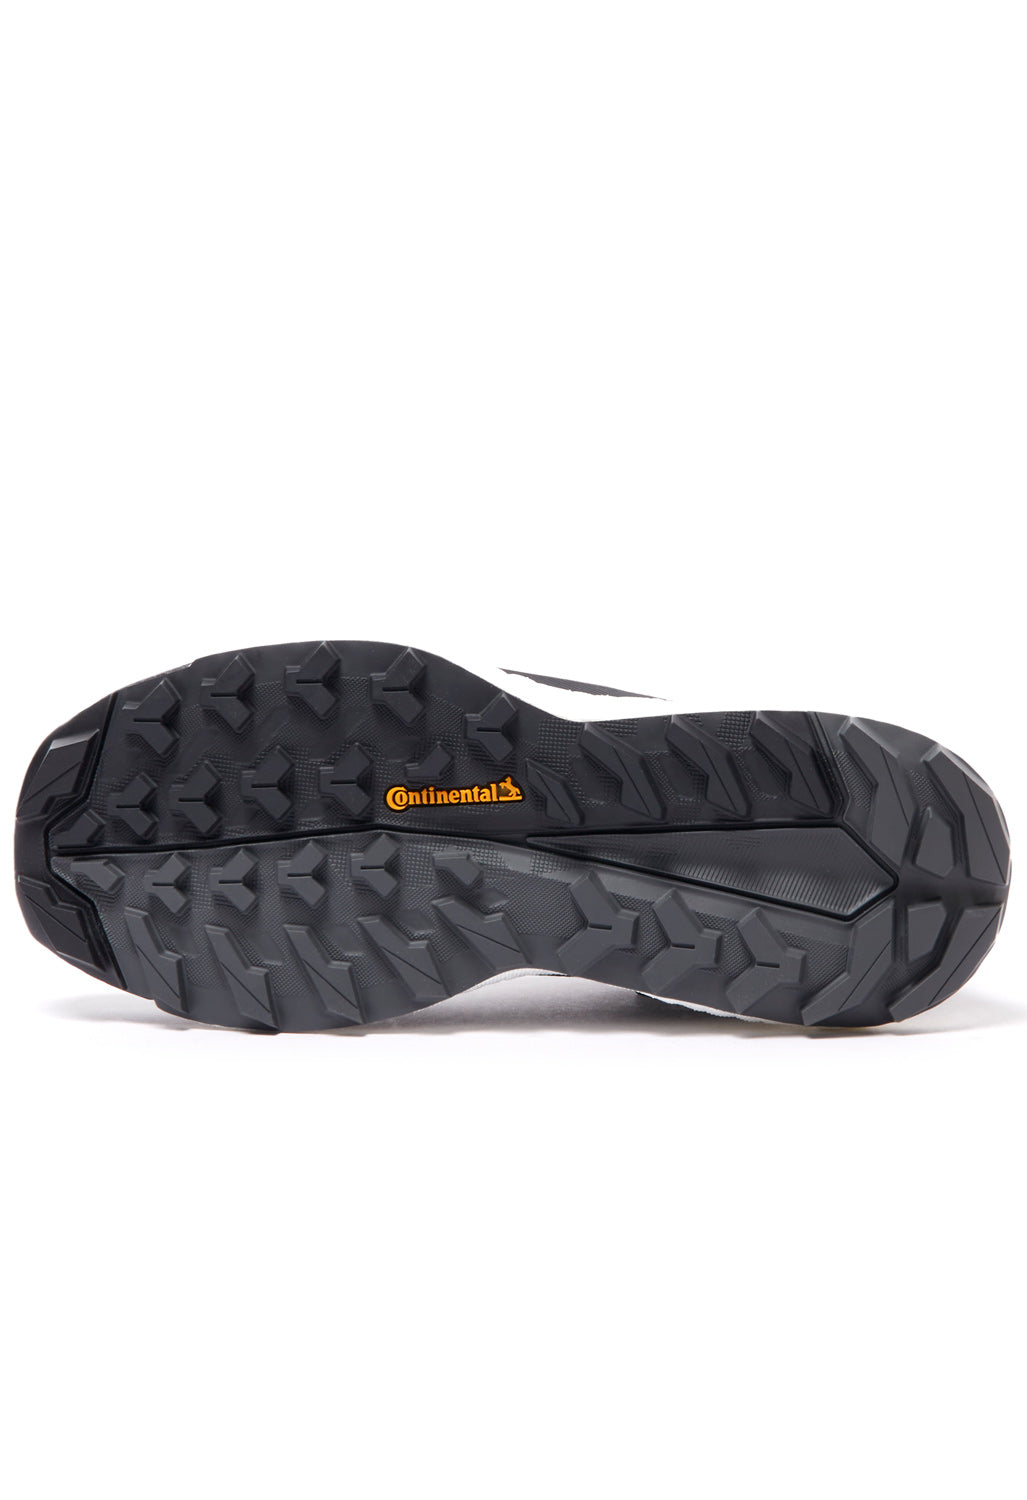 adidas TERREX Free Hiker 2 Women's Boots - Core Black/Core Black/Grey Six